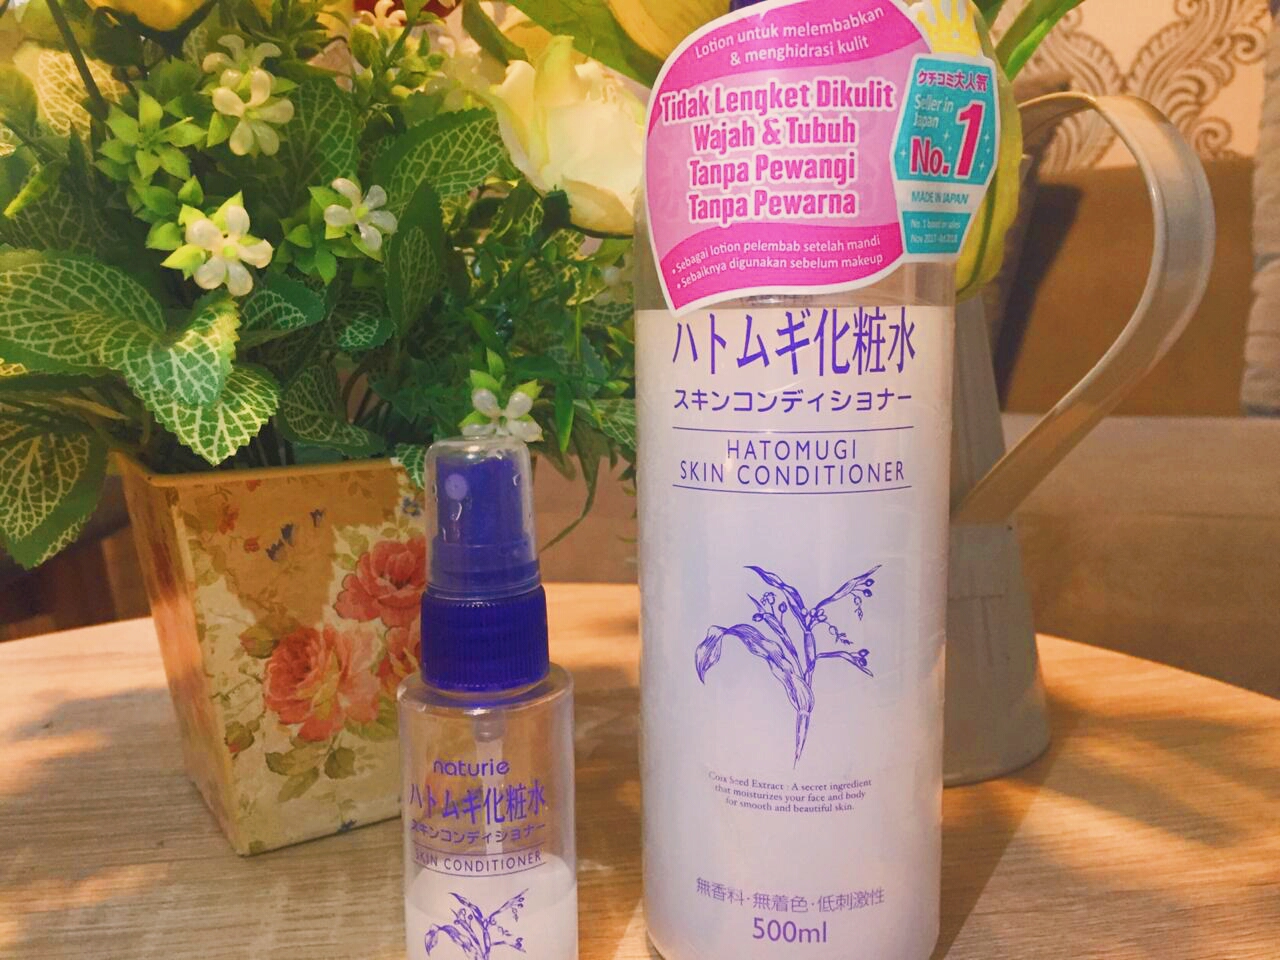 REVIEW Hatomugi Skin Conditioner Produk  Skincare 